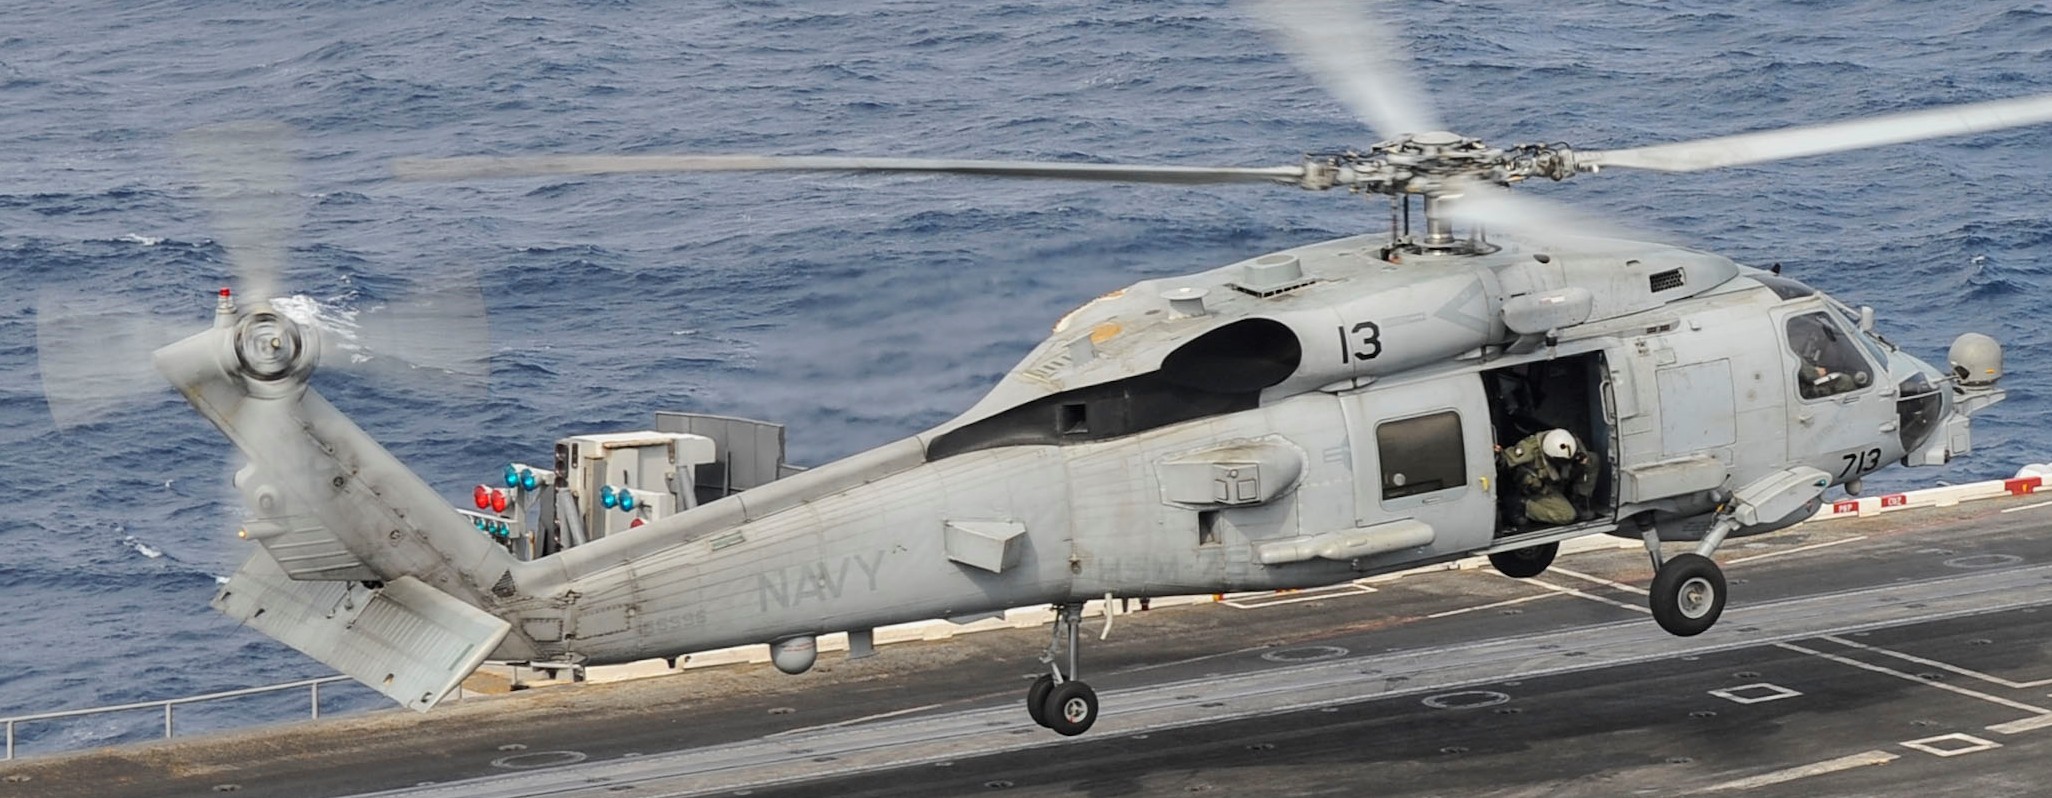 hsm-75 wolf pack helicopter maritime strike squadron mh-60r seahawk cvw-11 cvn-68 uss nimitz 17